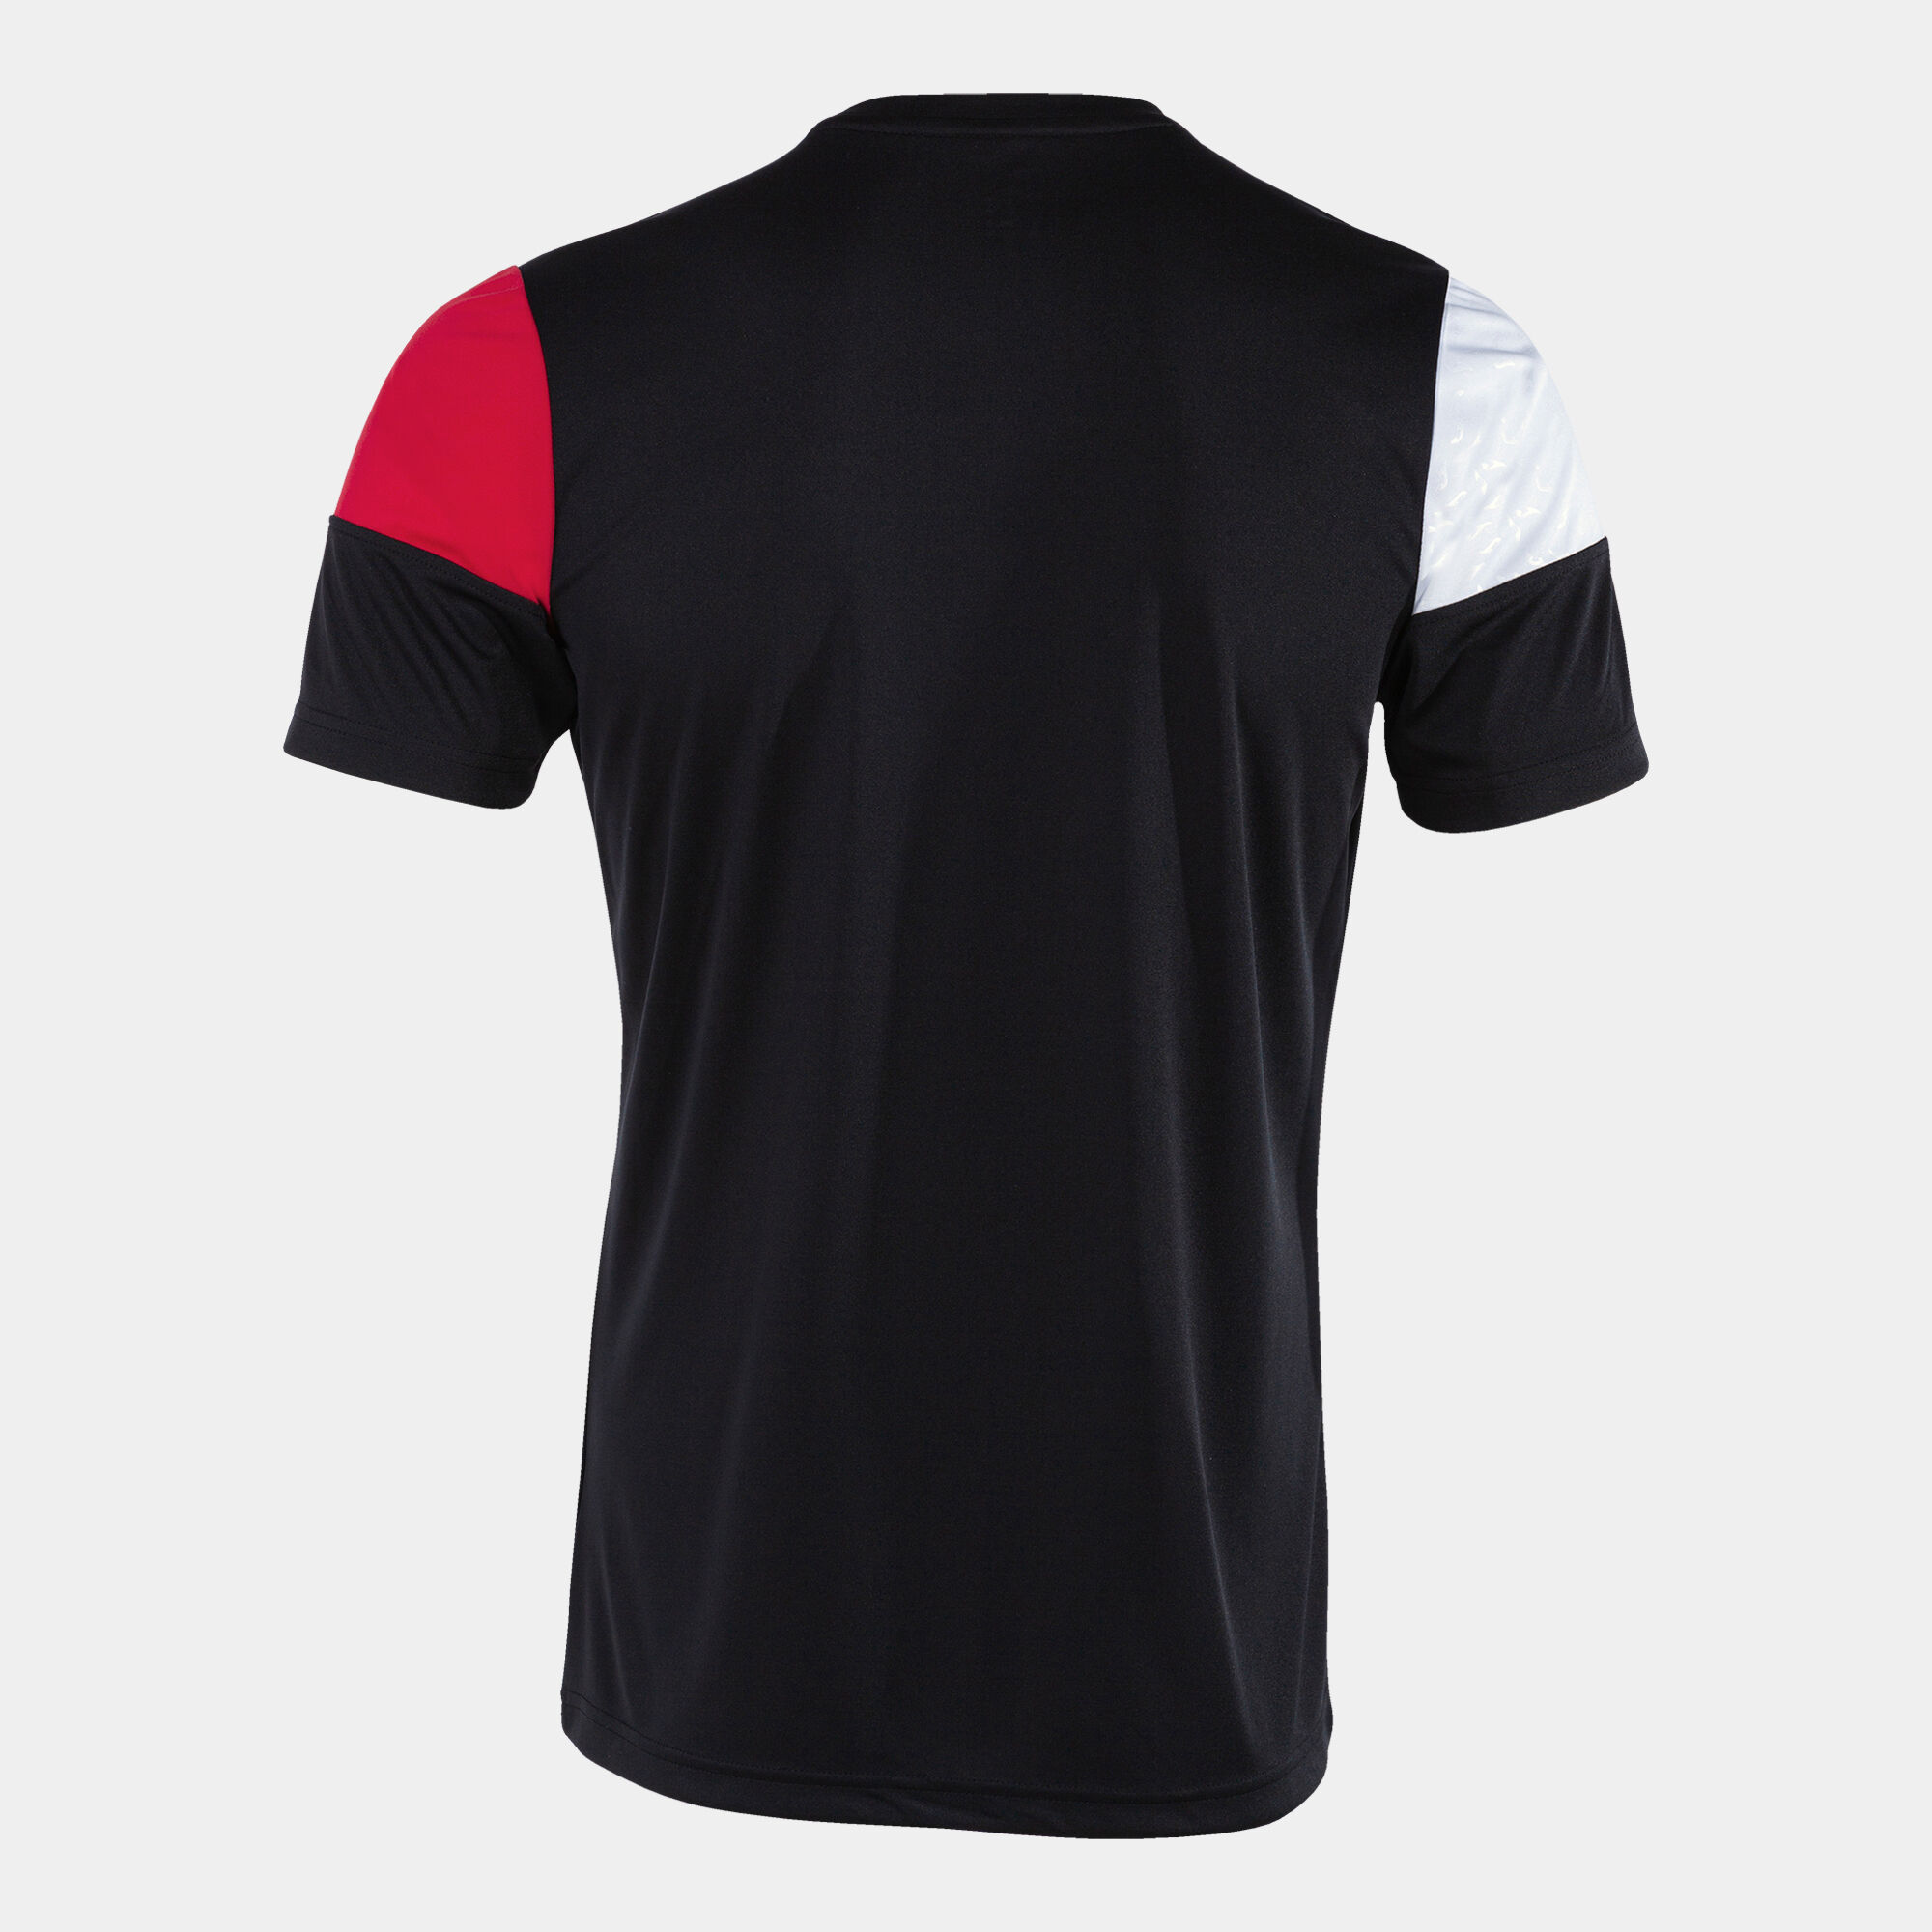 Camiseta manga corta hombre Crew V negro rojo blanco